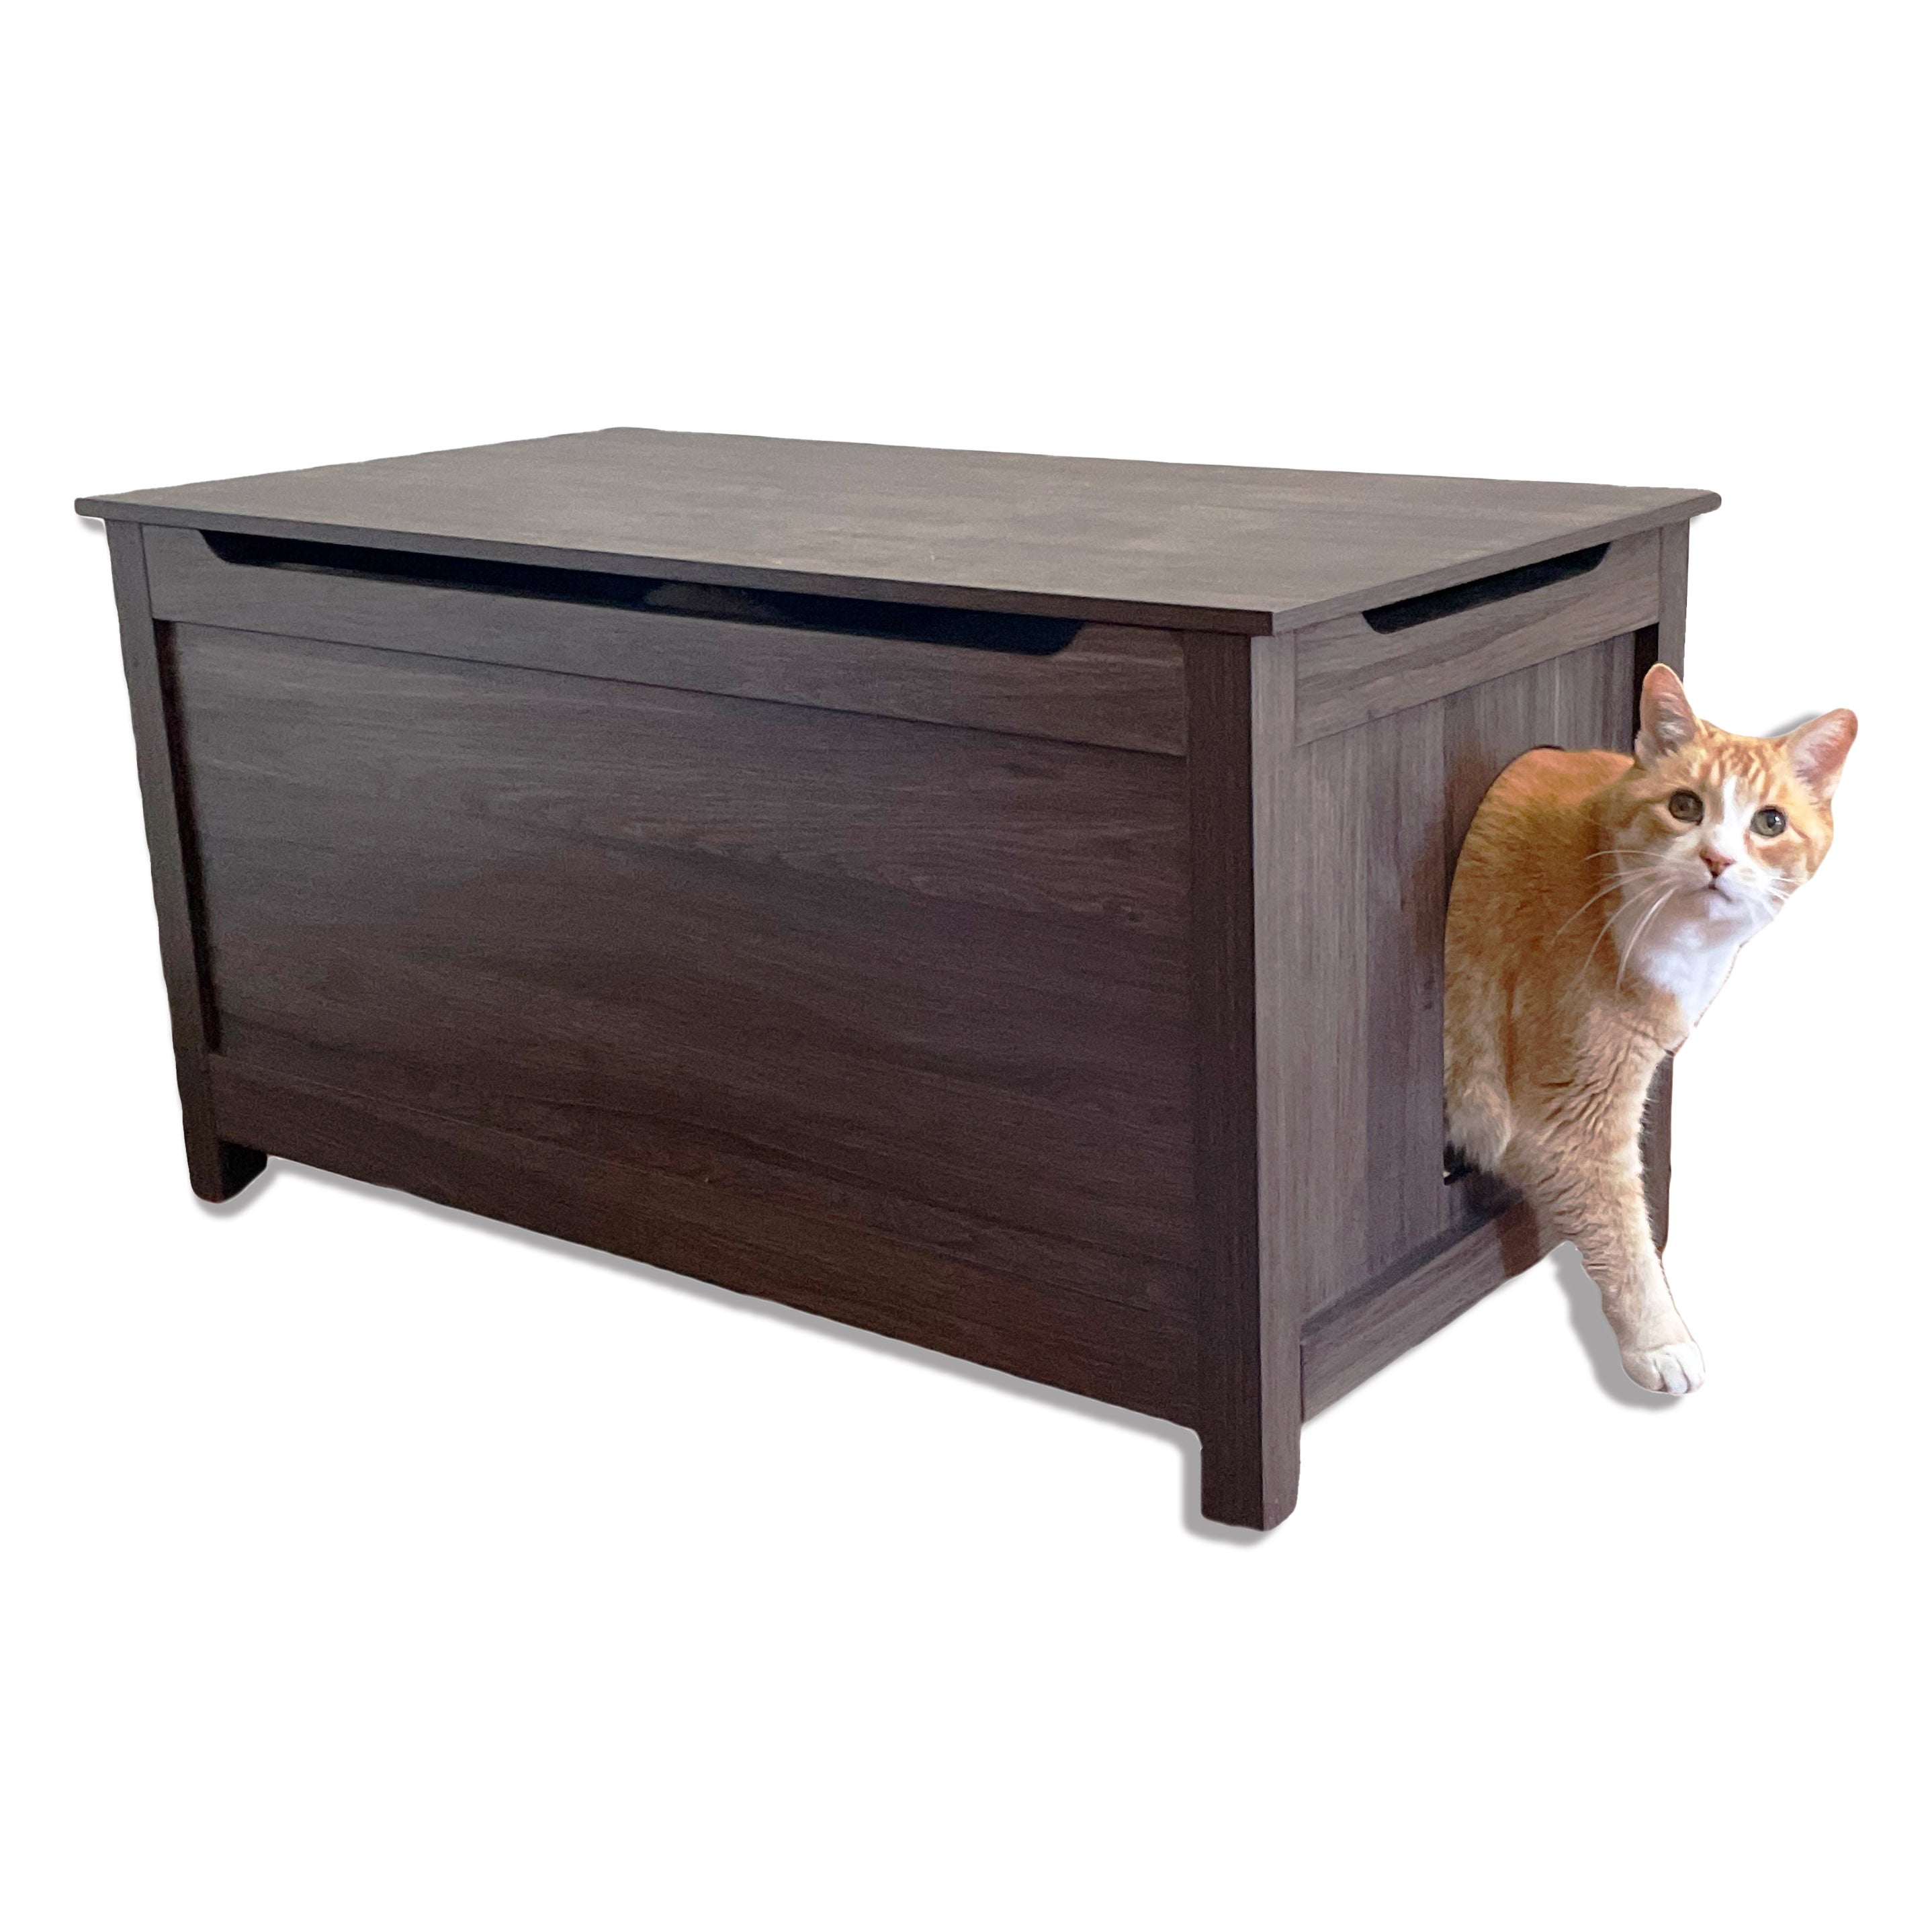 Designer Pet Products Parker Catbox Litter Box Enclosure in Oak